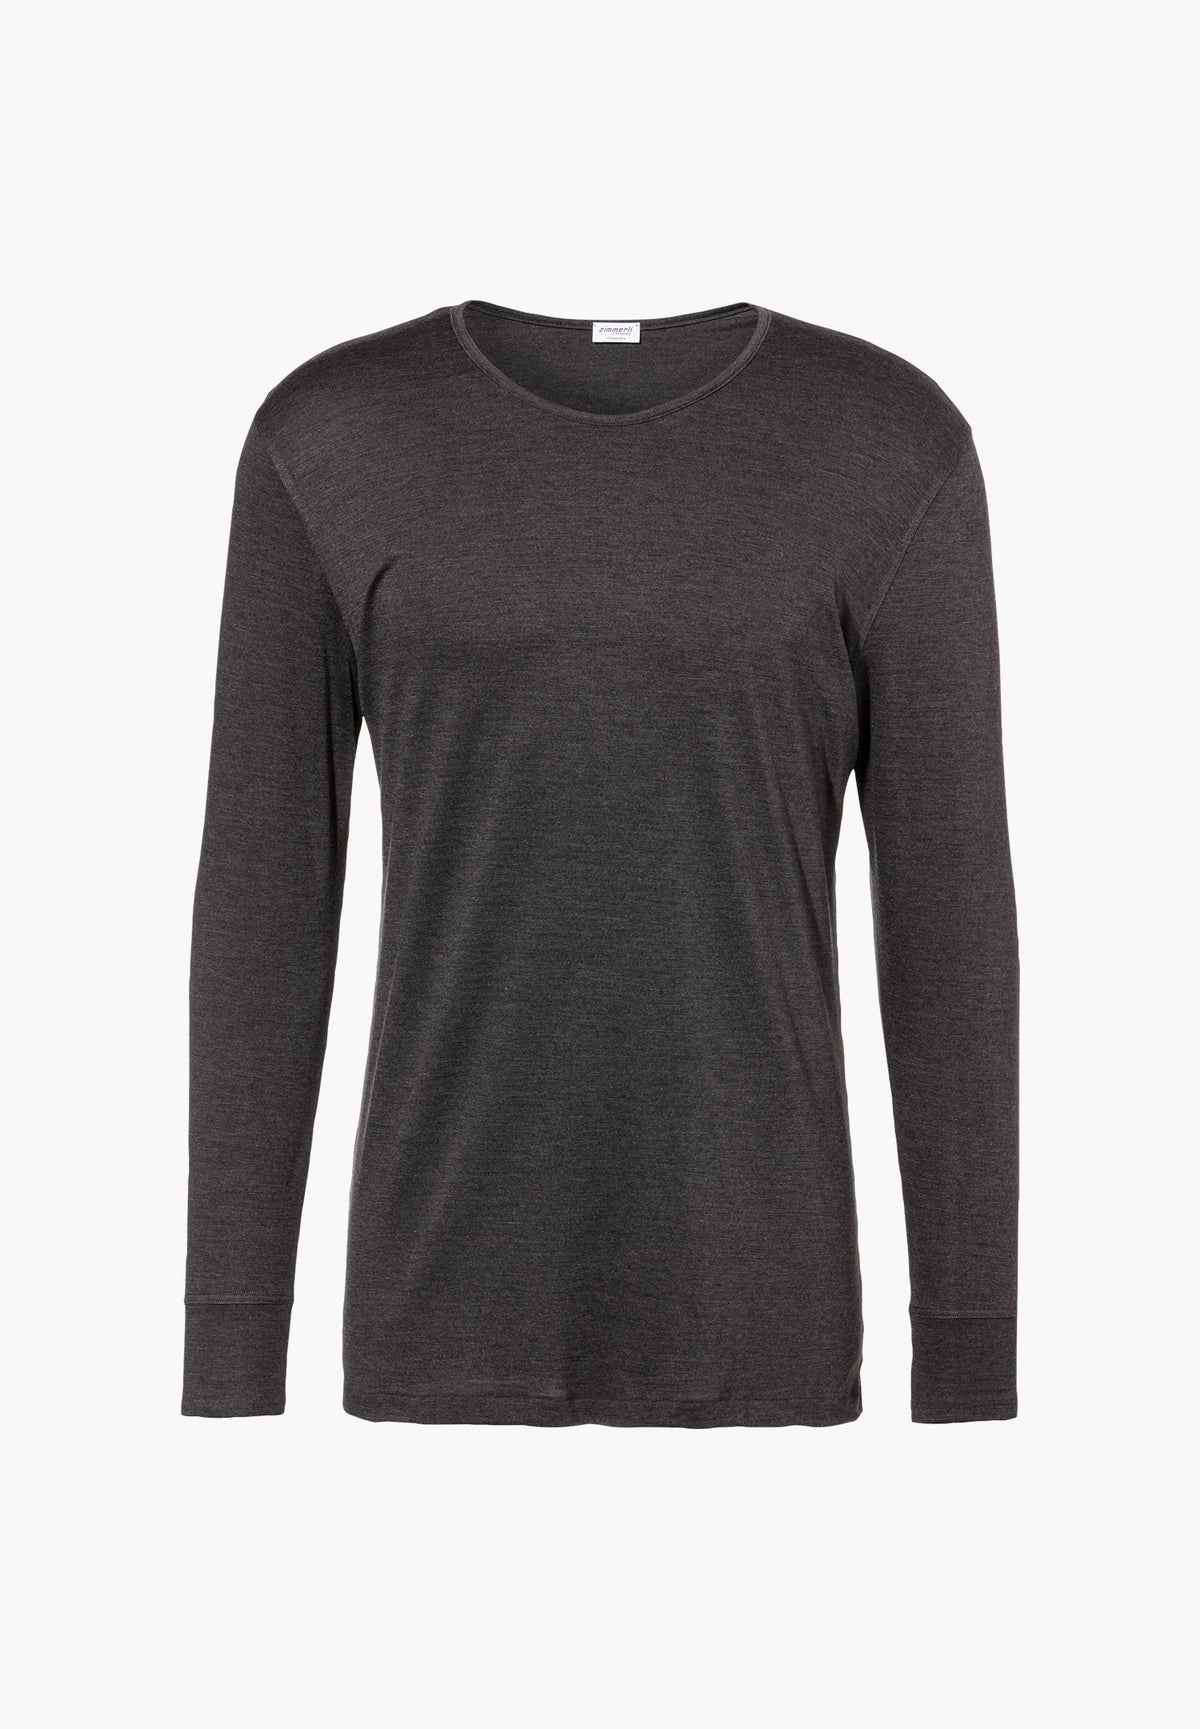 Wool &amp; Silk | T-Shirt à manches longues - charcoal